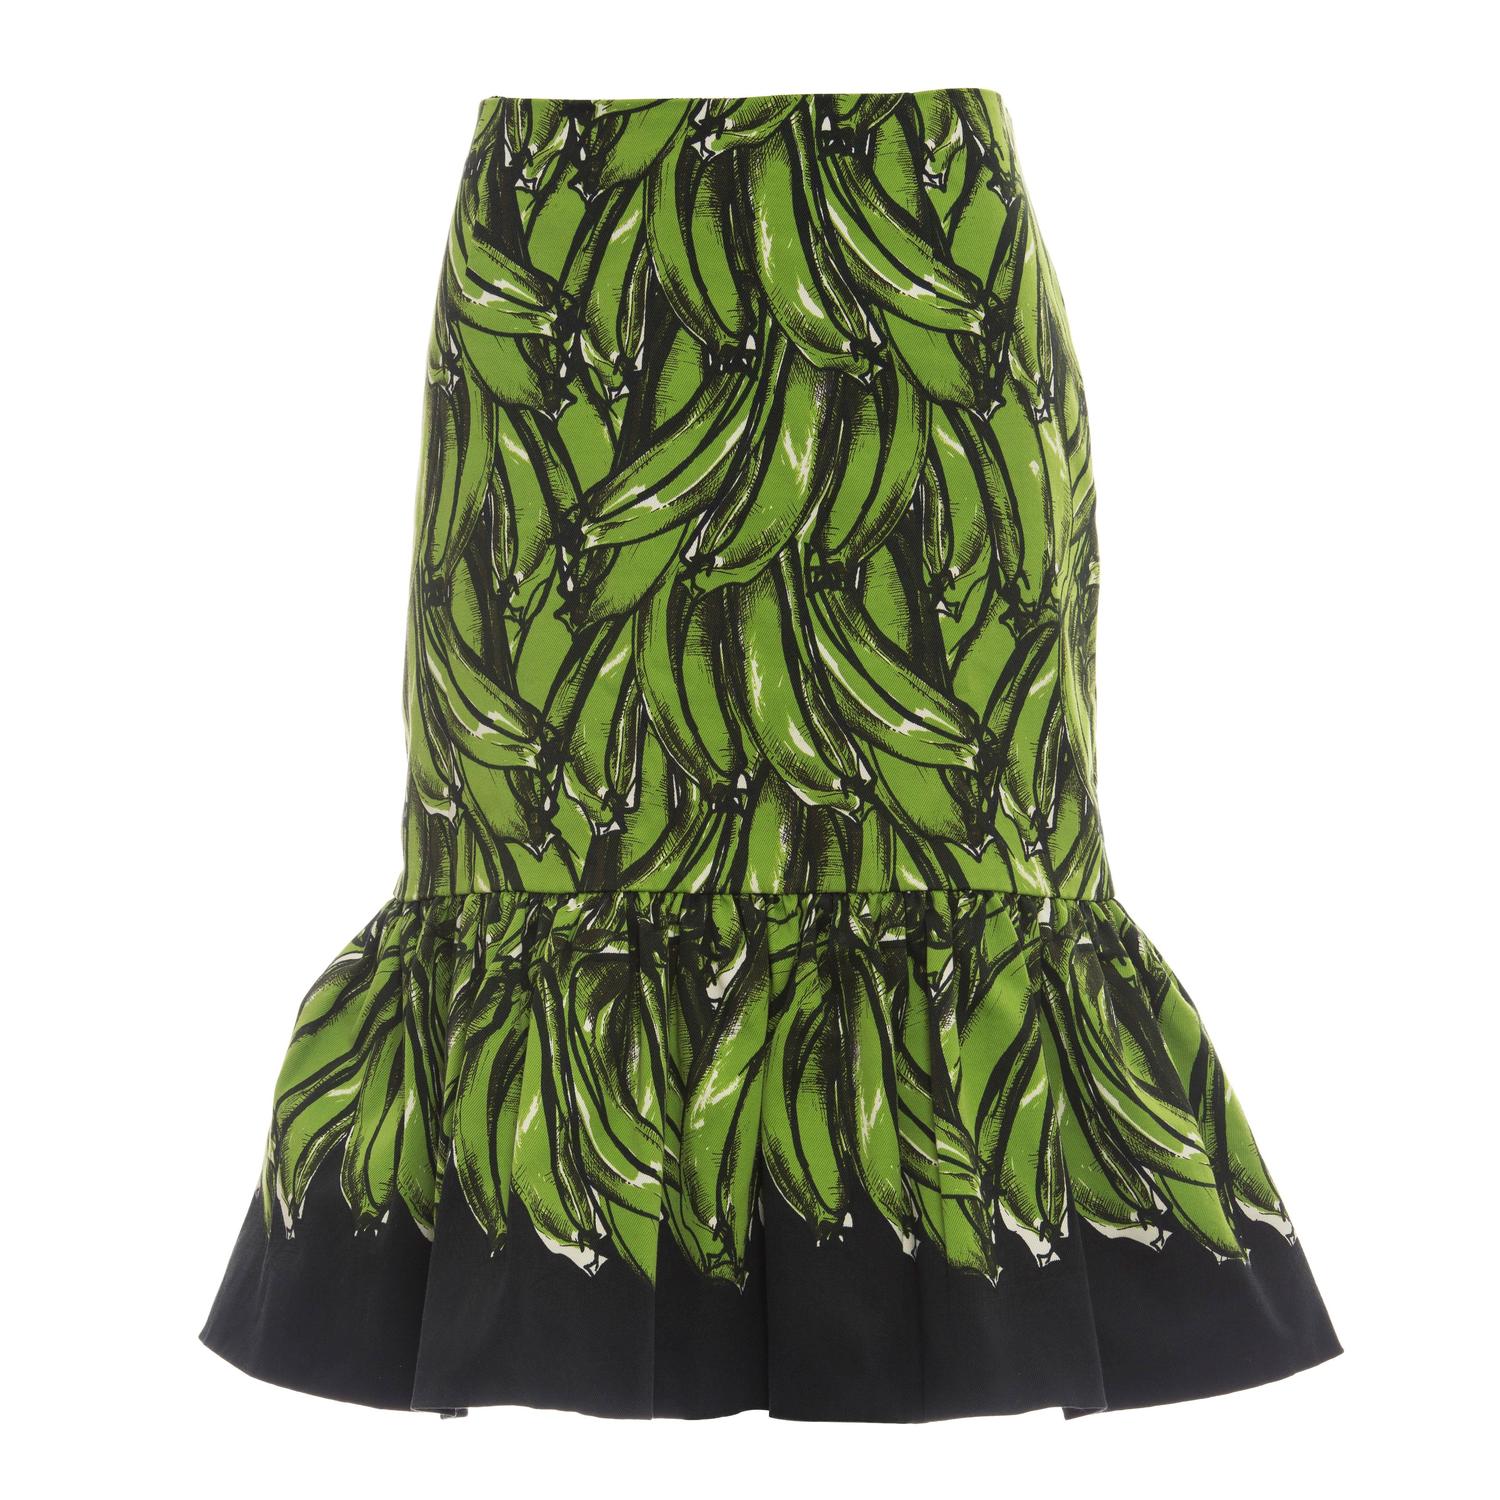 Prada Banana Print Skirt, Spring 2011 at 1stdibs